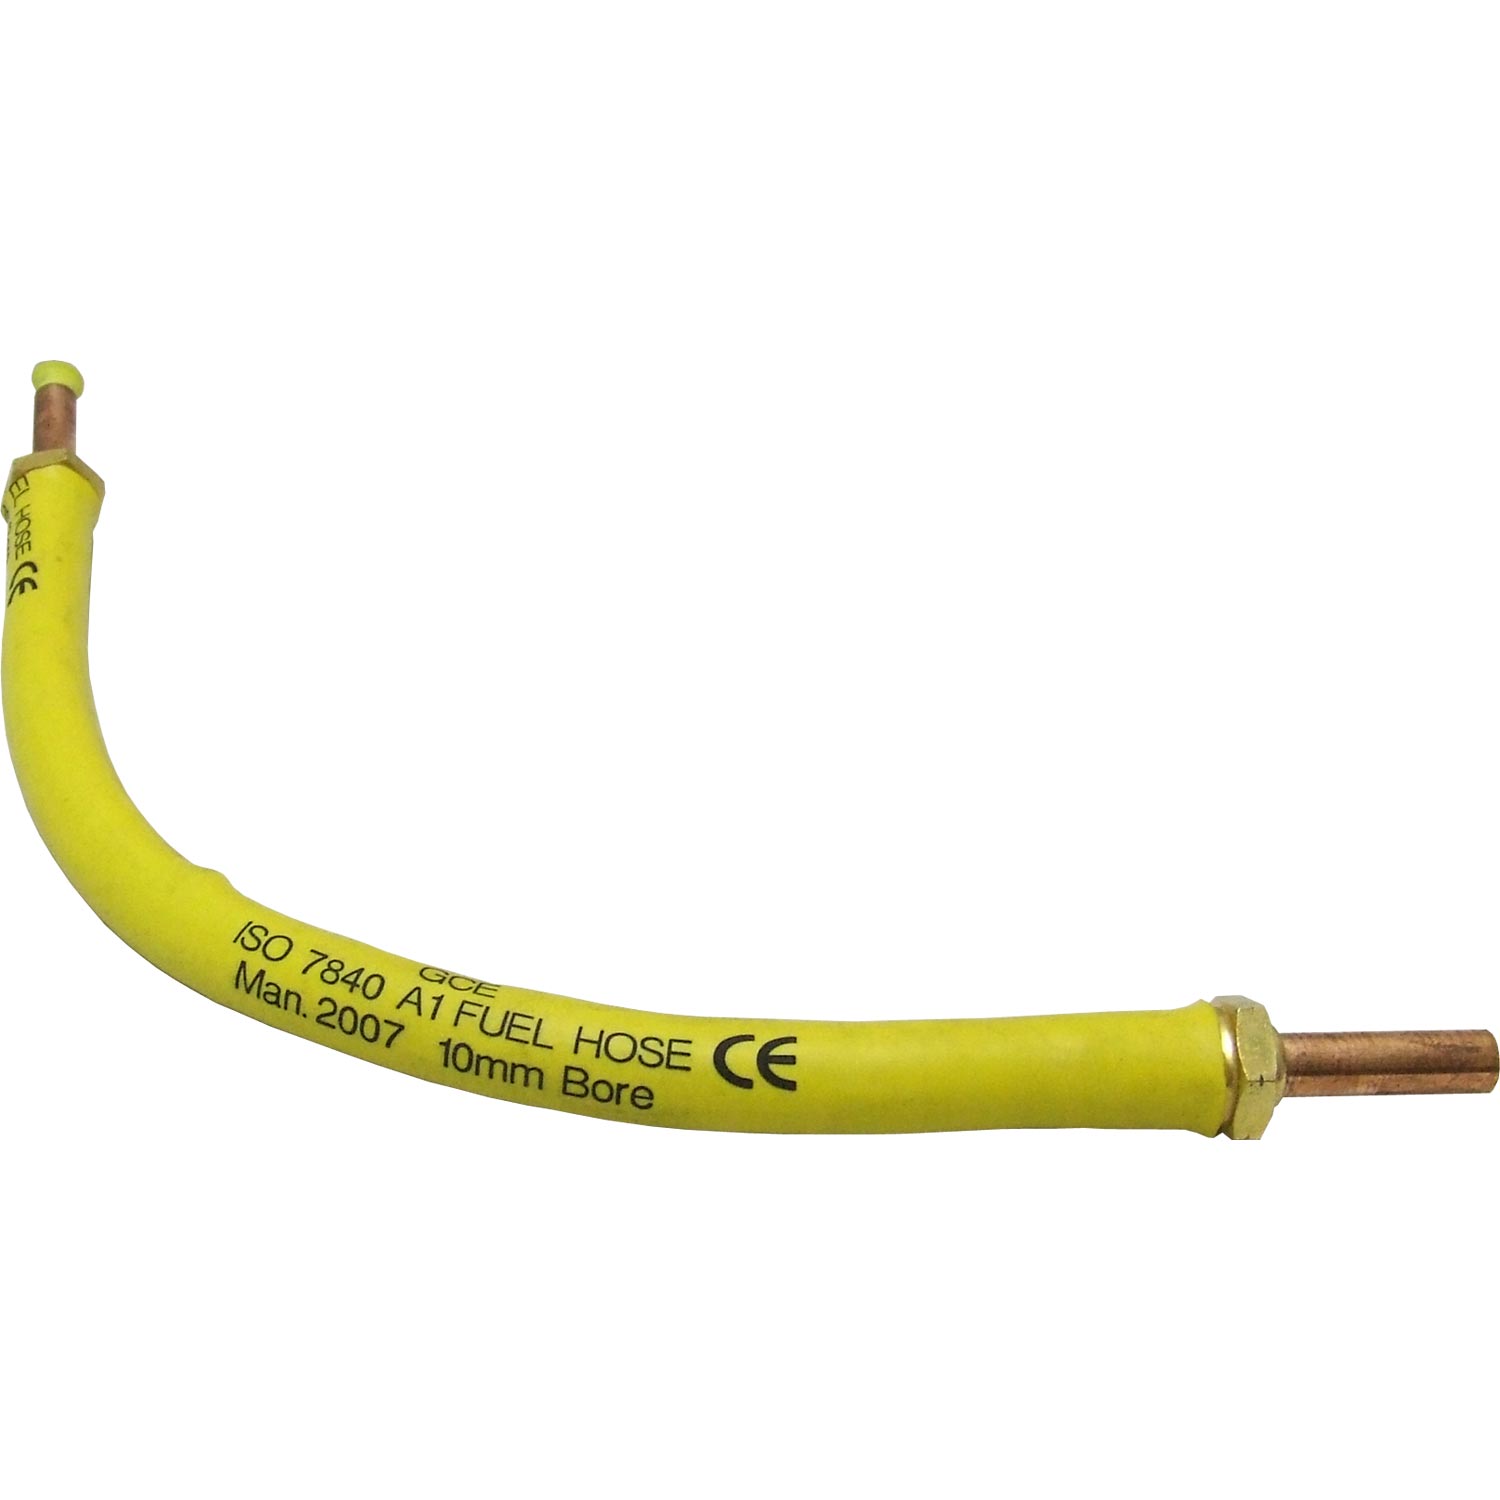 6mm bore Fire Resistant Marine fuel hose ISO7840 A1 choose length  1-57800 